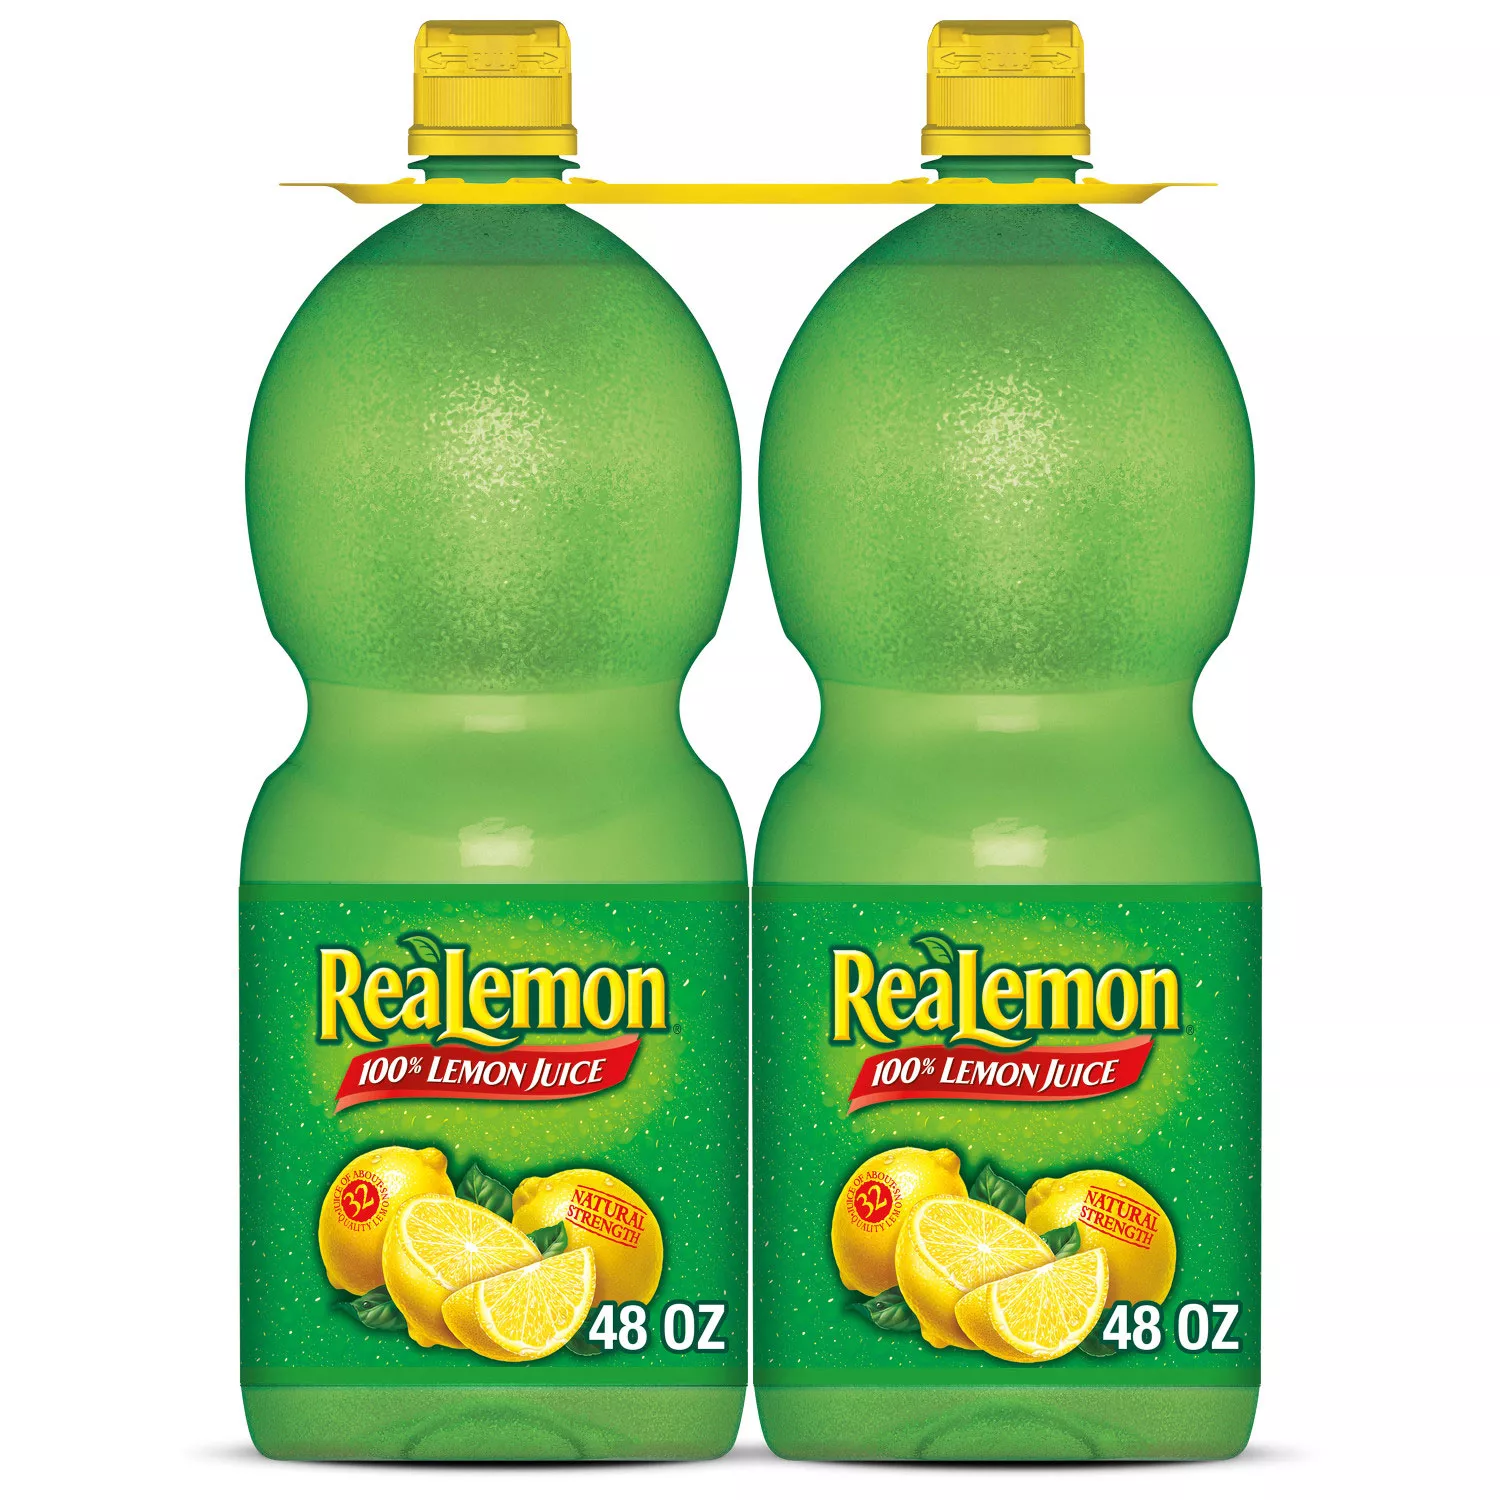 ReaLemon Lemon Juice